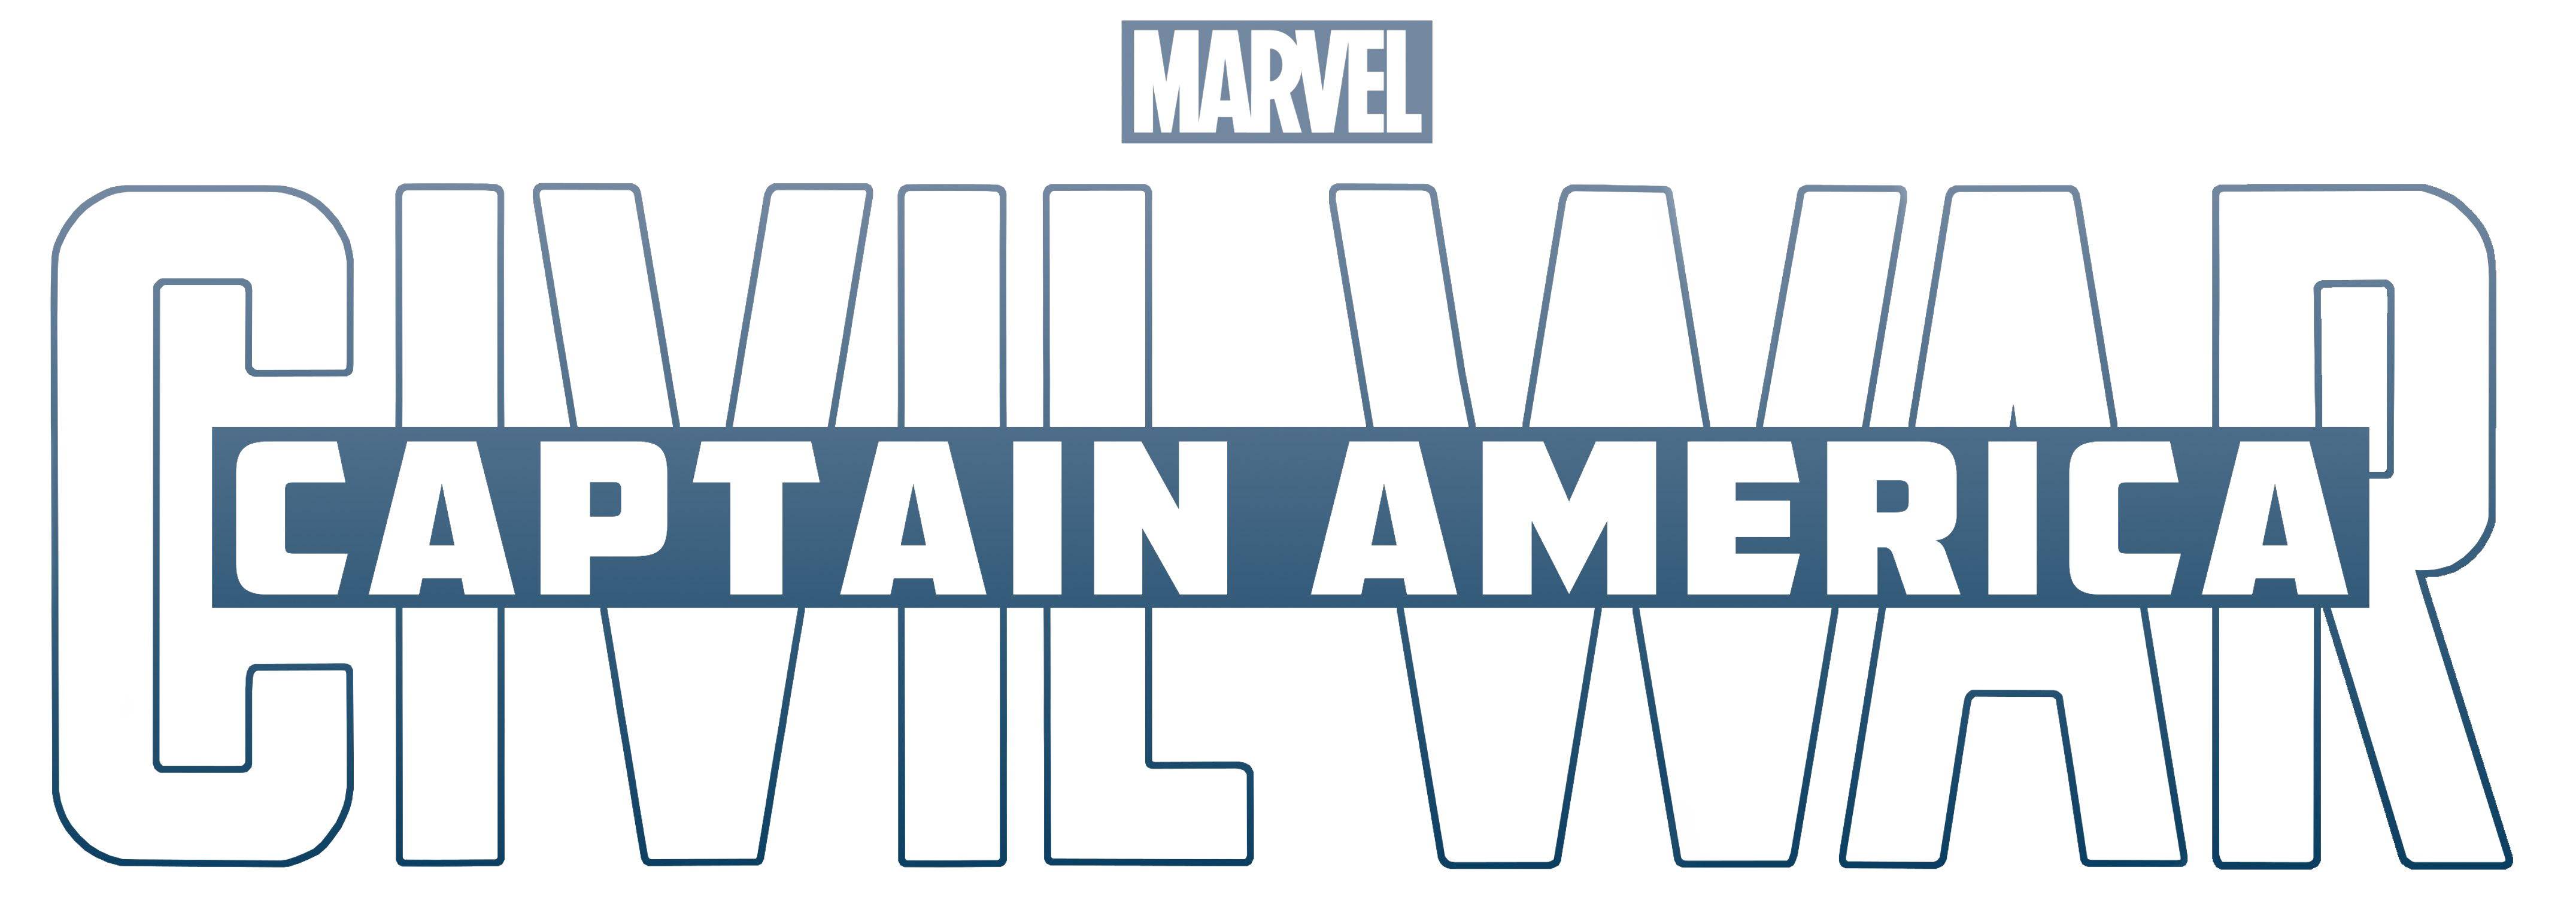 Marvel Captain Америка Гражданская война